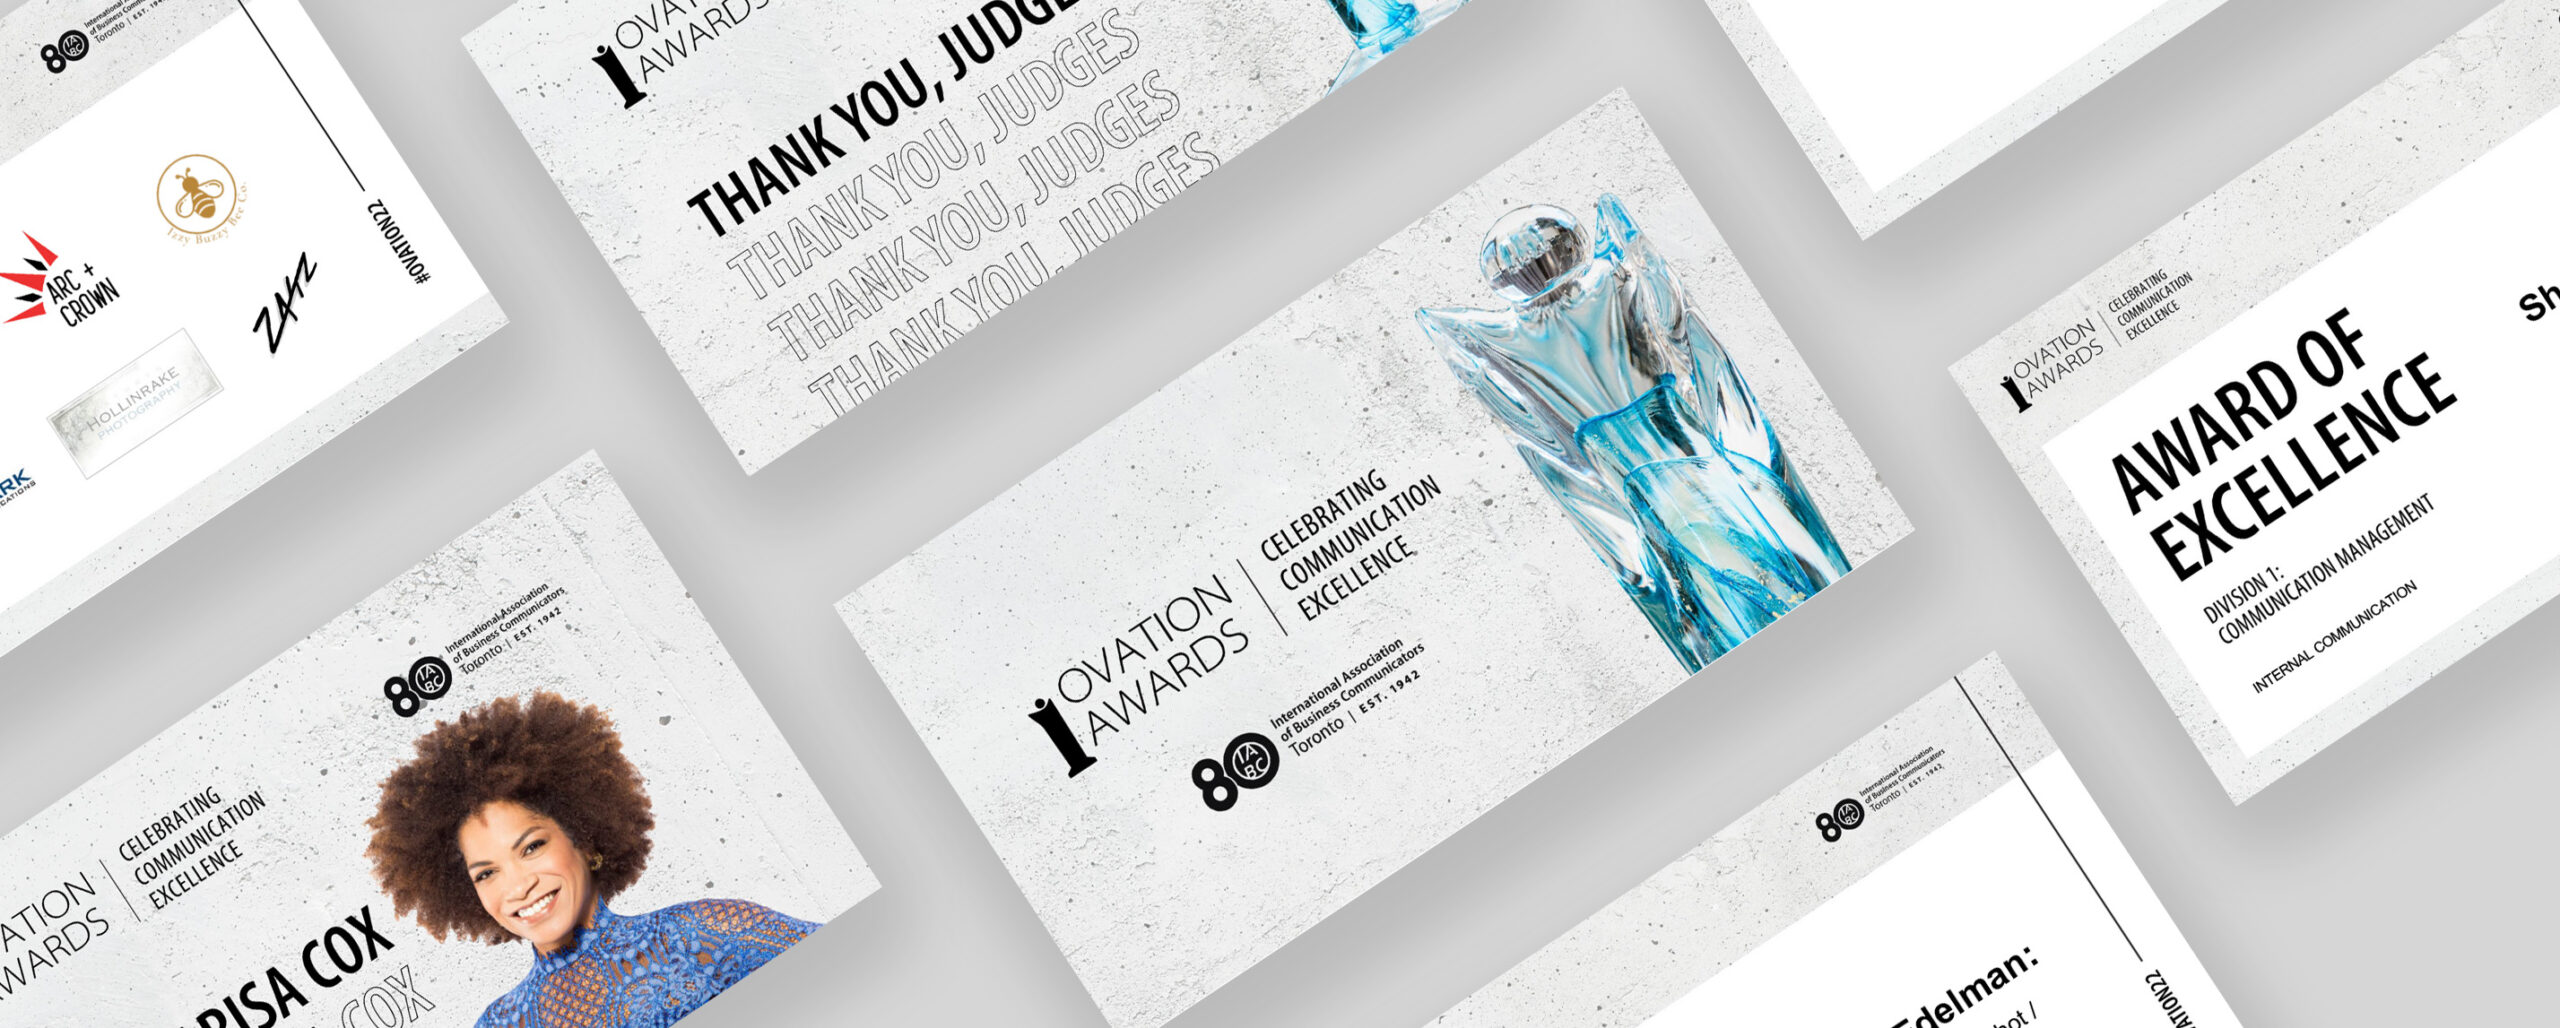 Ovation Awards presentation slides